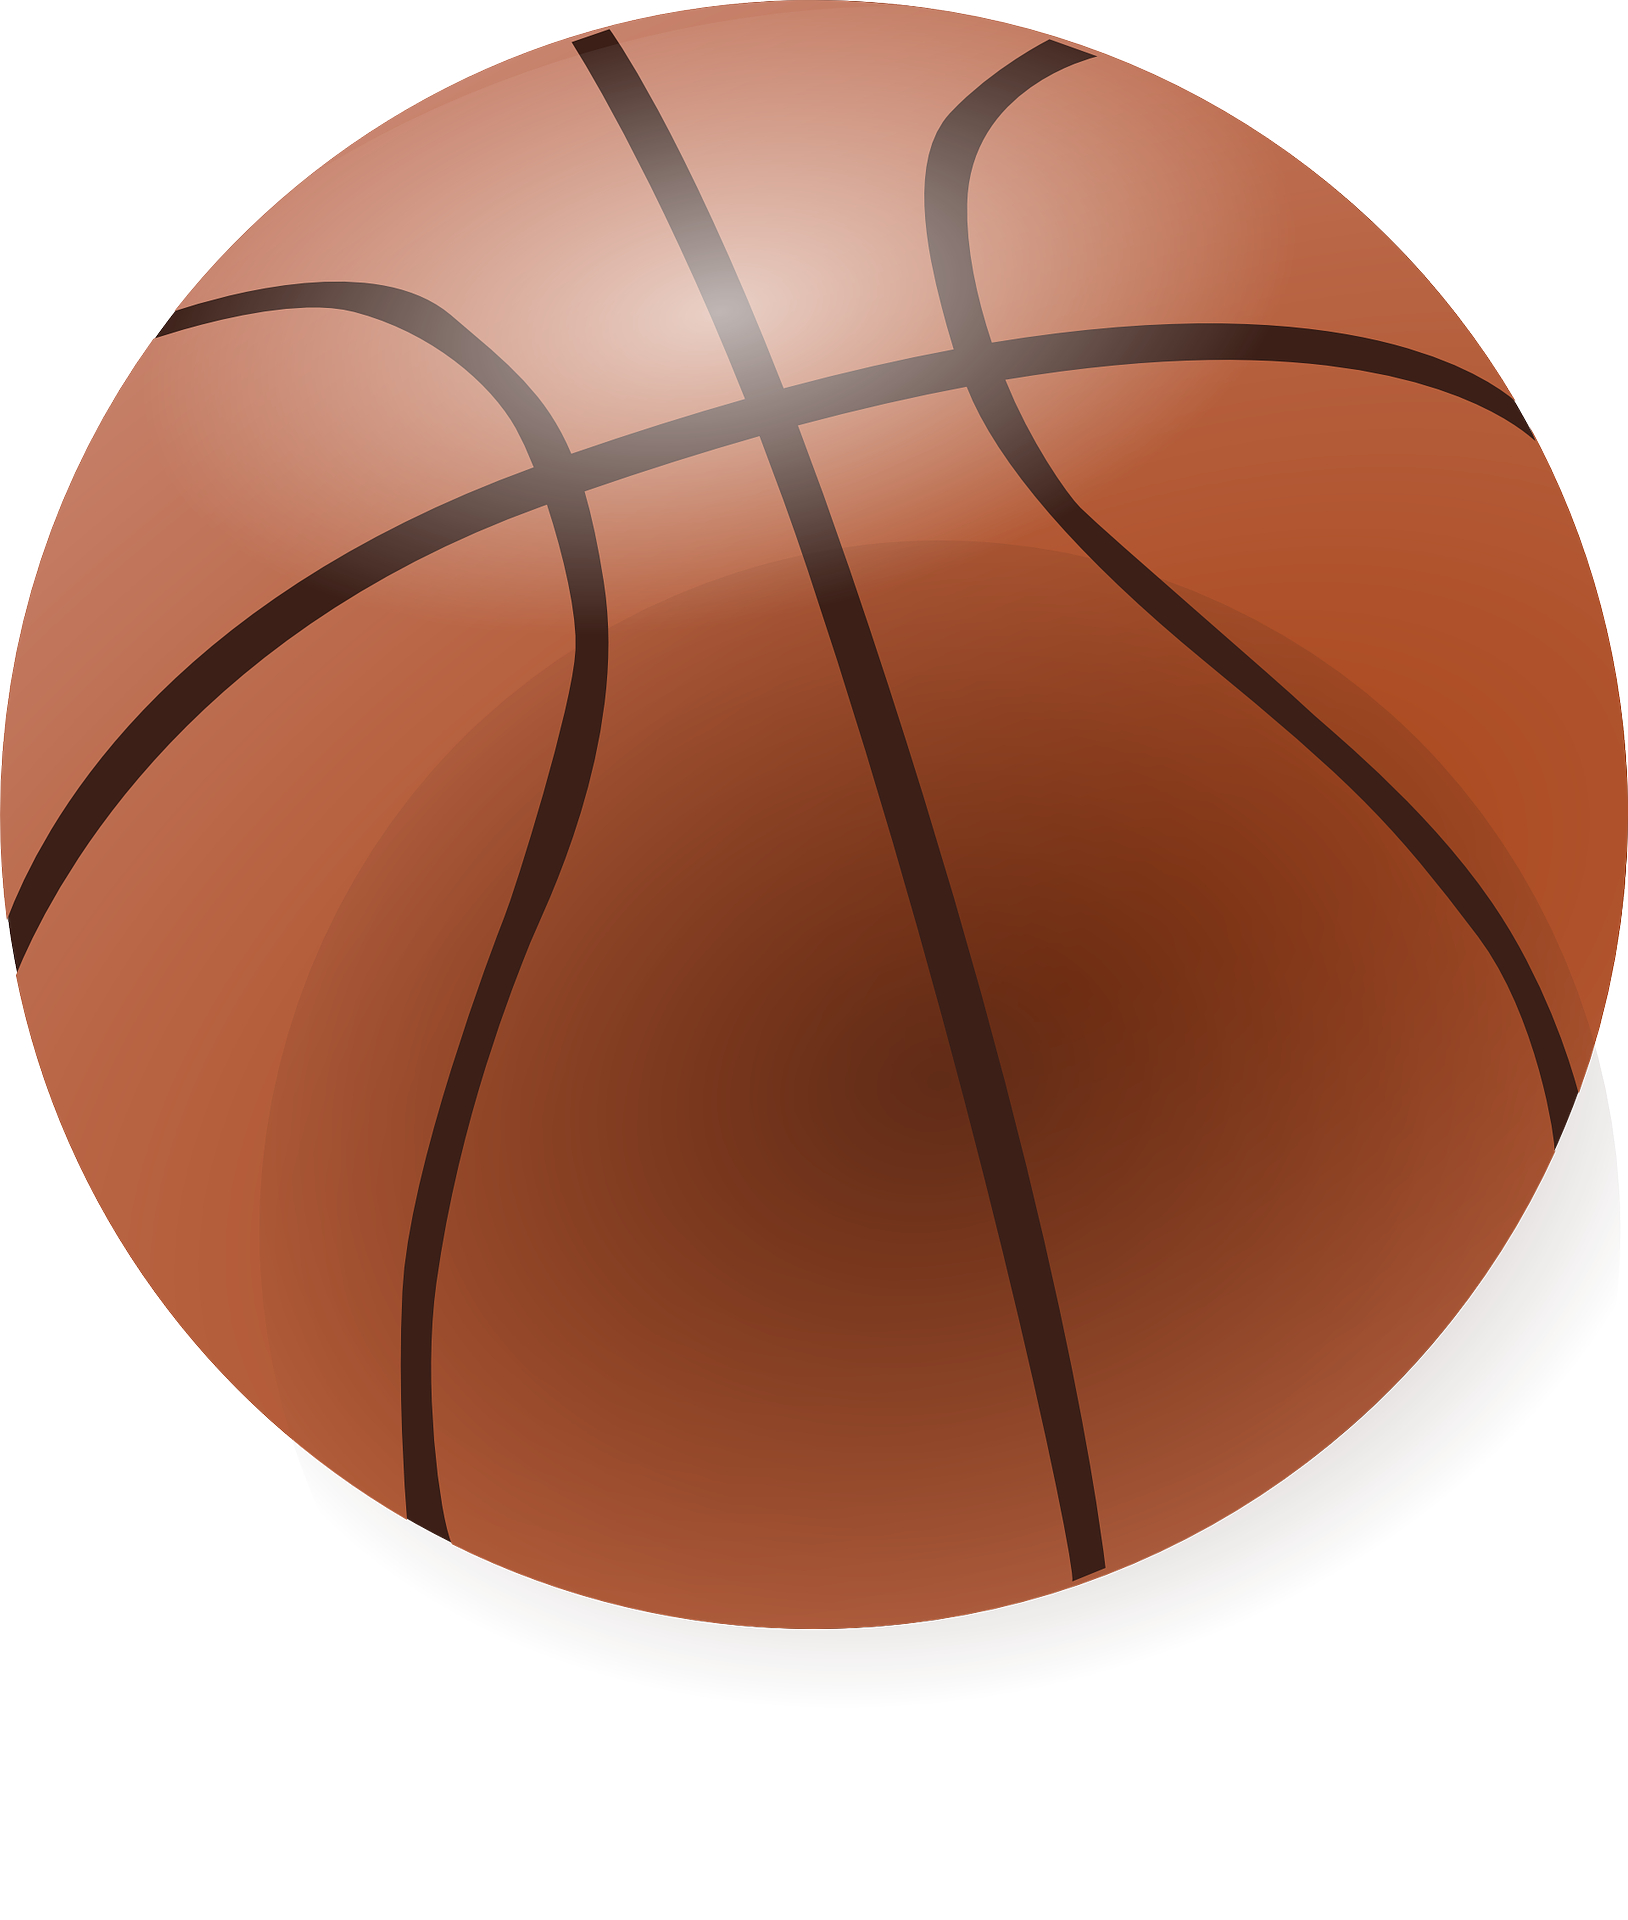 Brown basketball vector